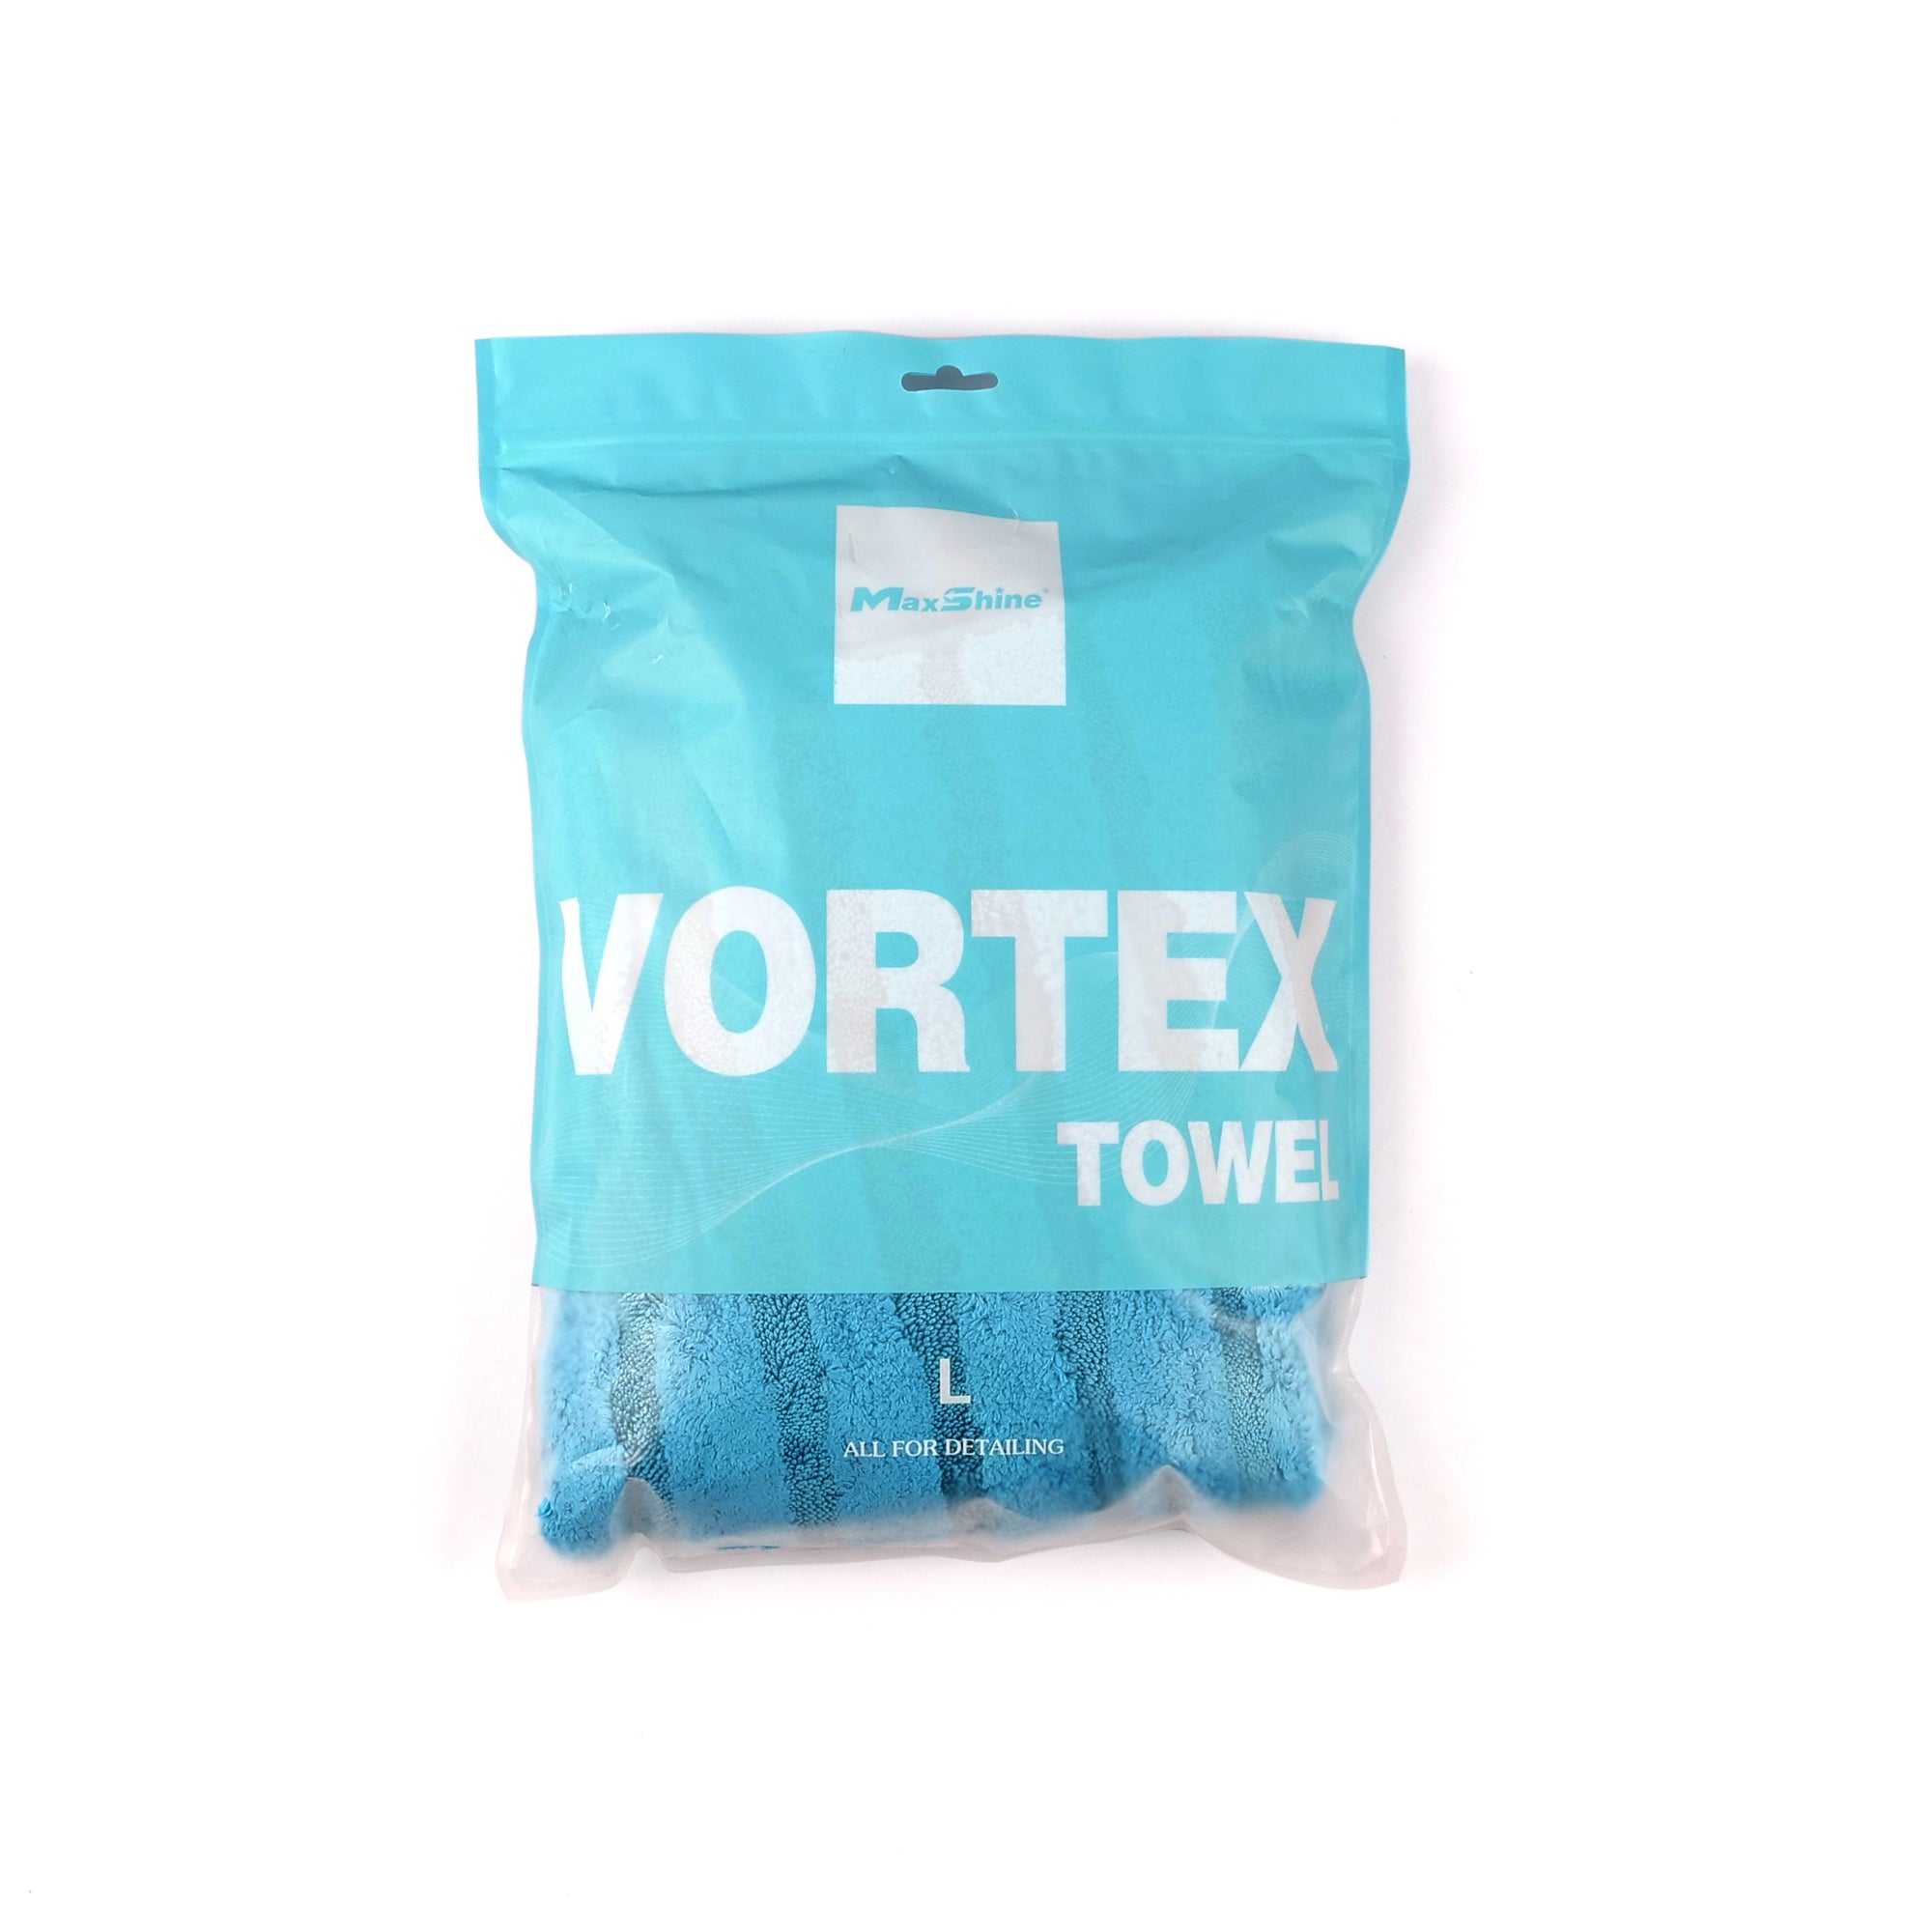 MAXSHINE - Vortex Towel